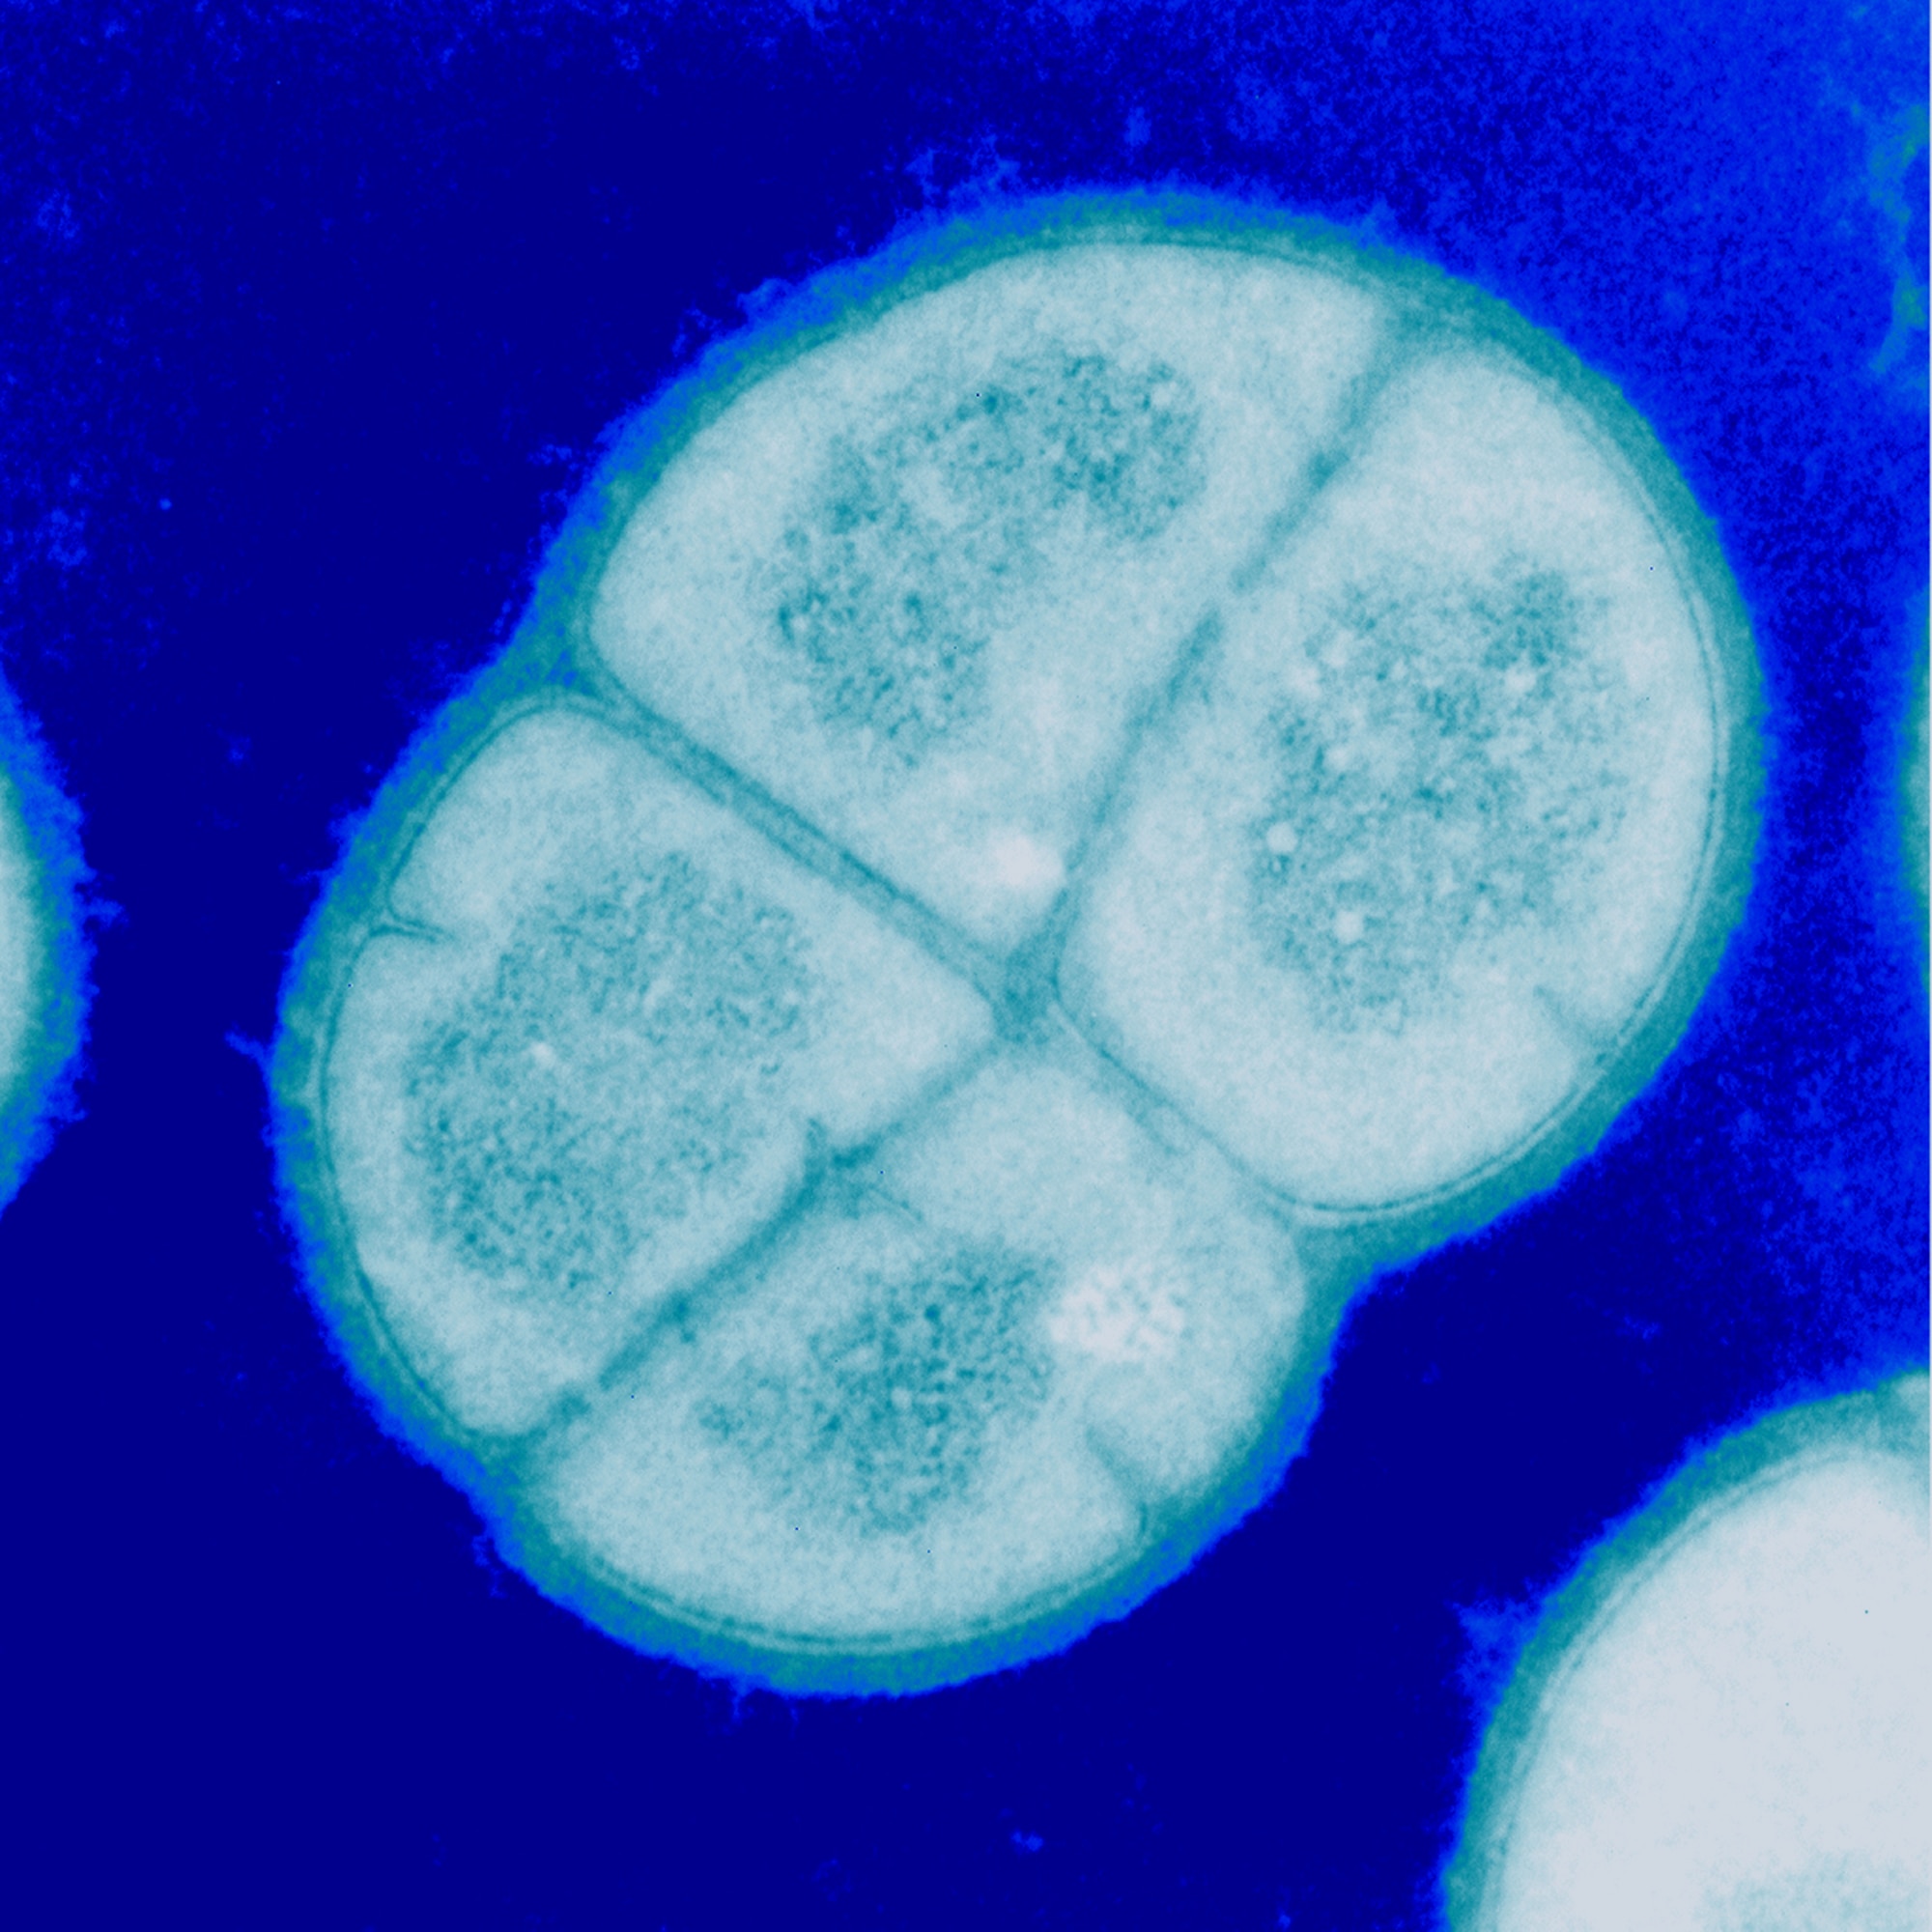 11. Deinococcus radiodurans, magnified 60,000 times. (Image taken